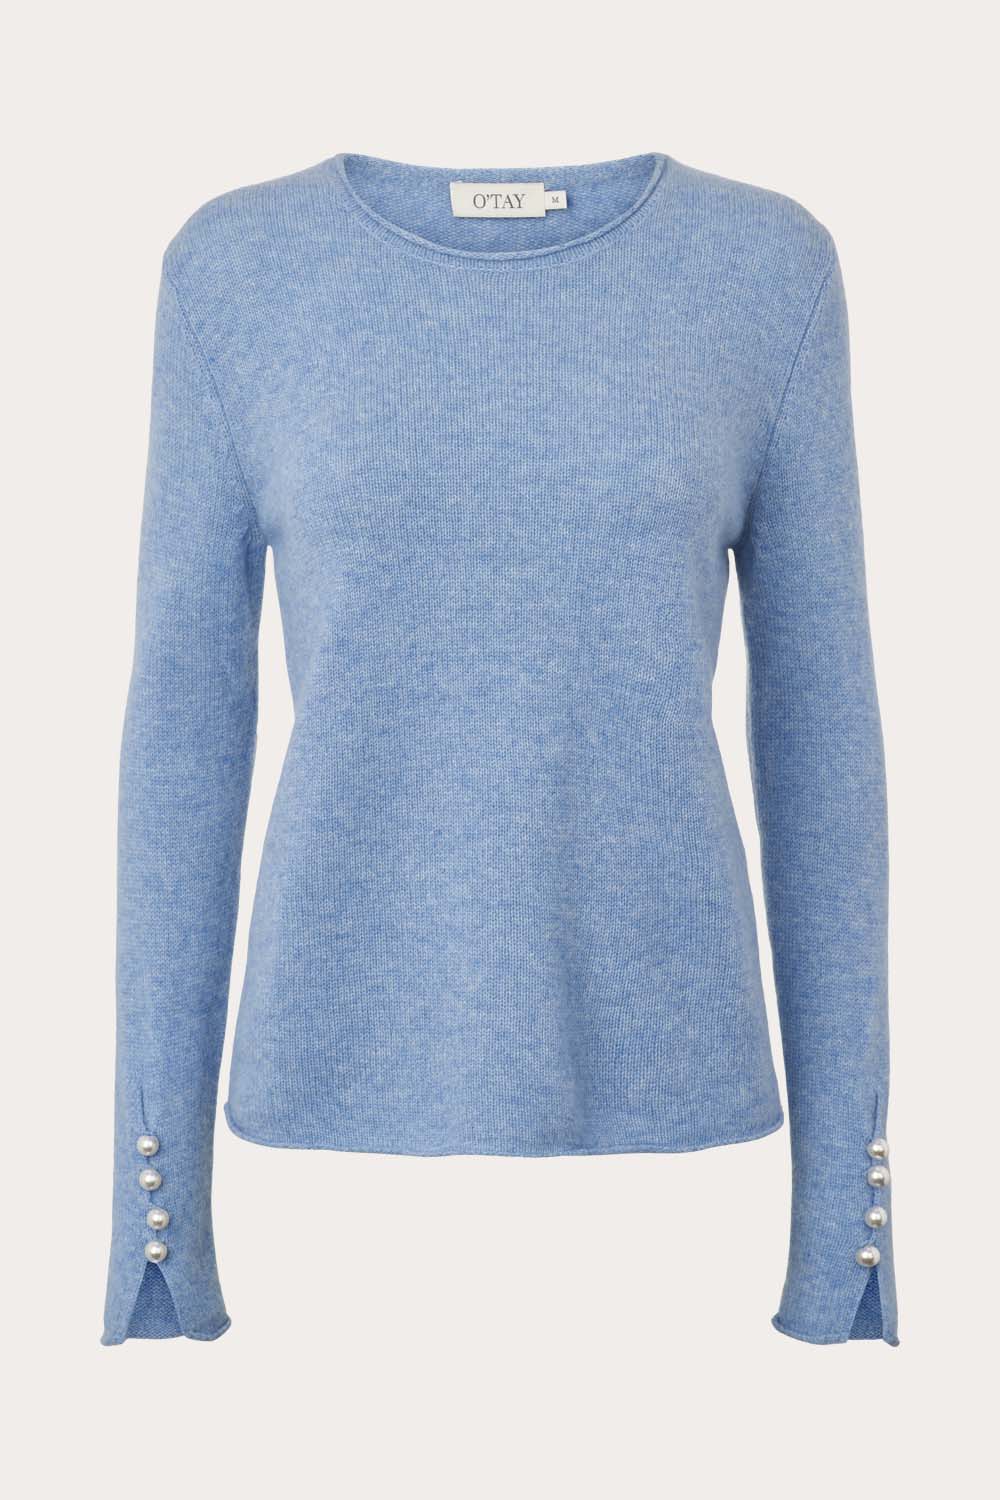 O'TAY Abbelone Sweater Blouses Hortensia